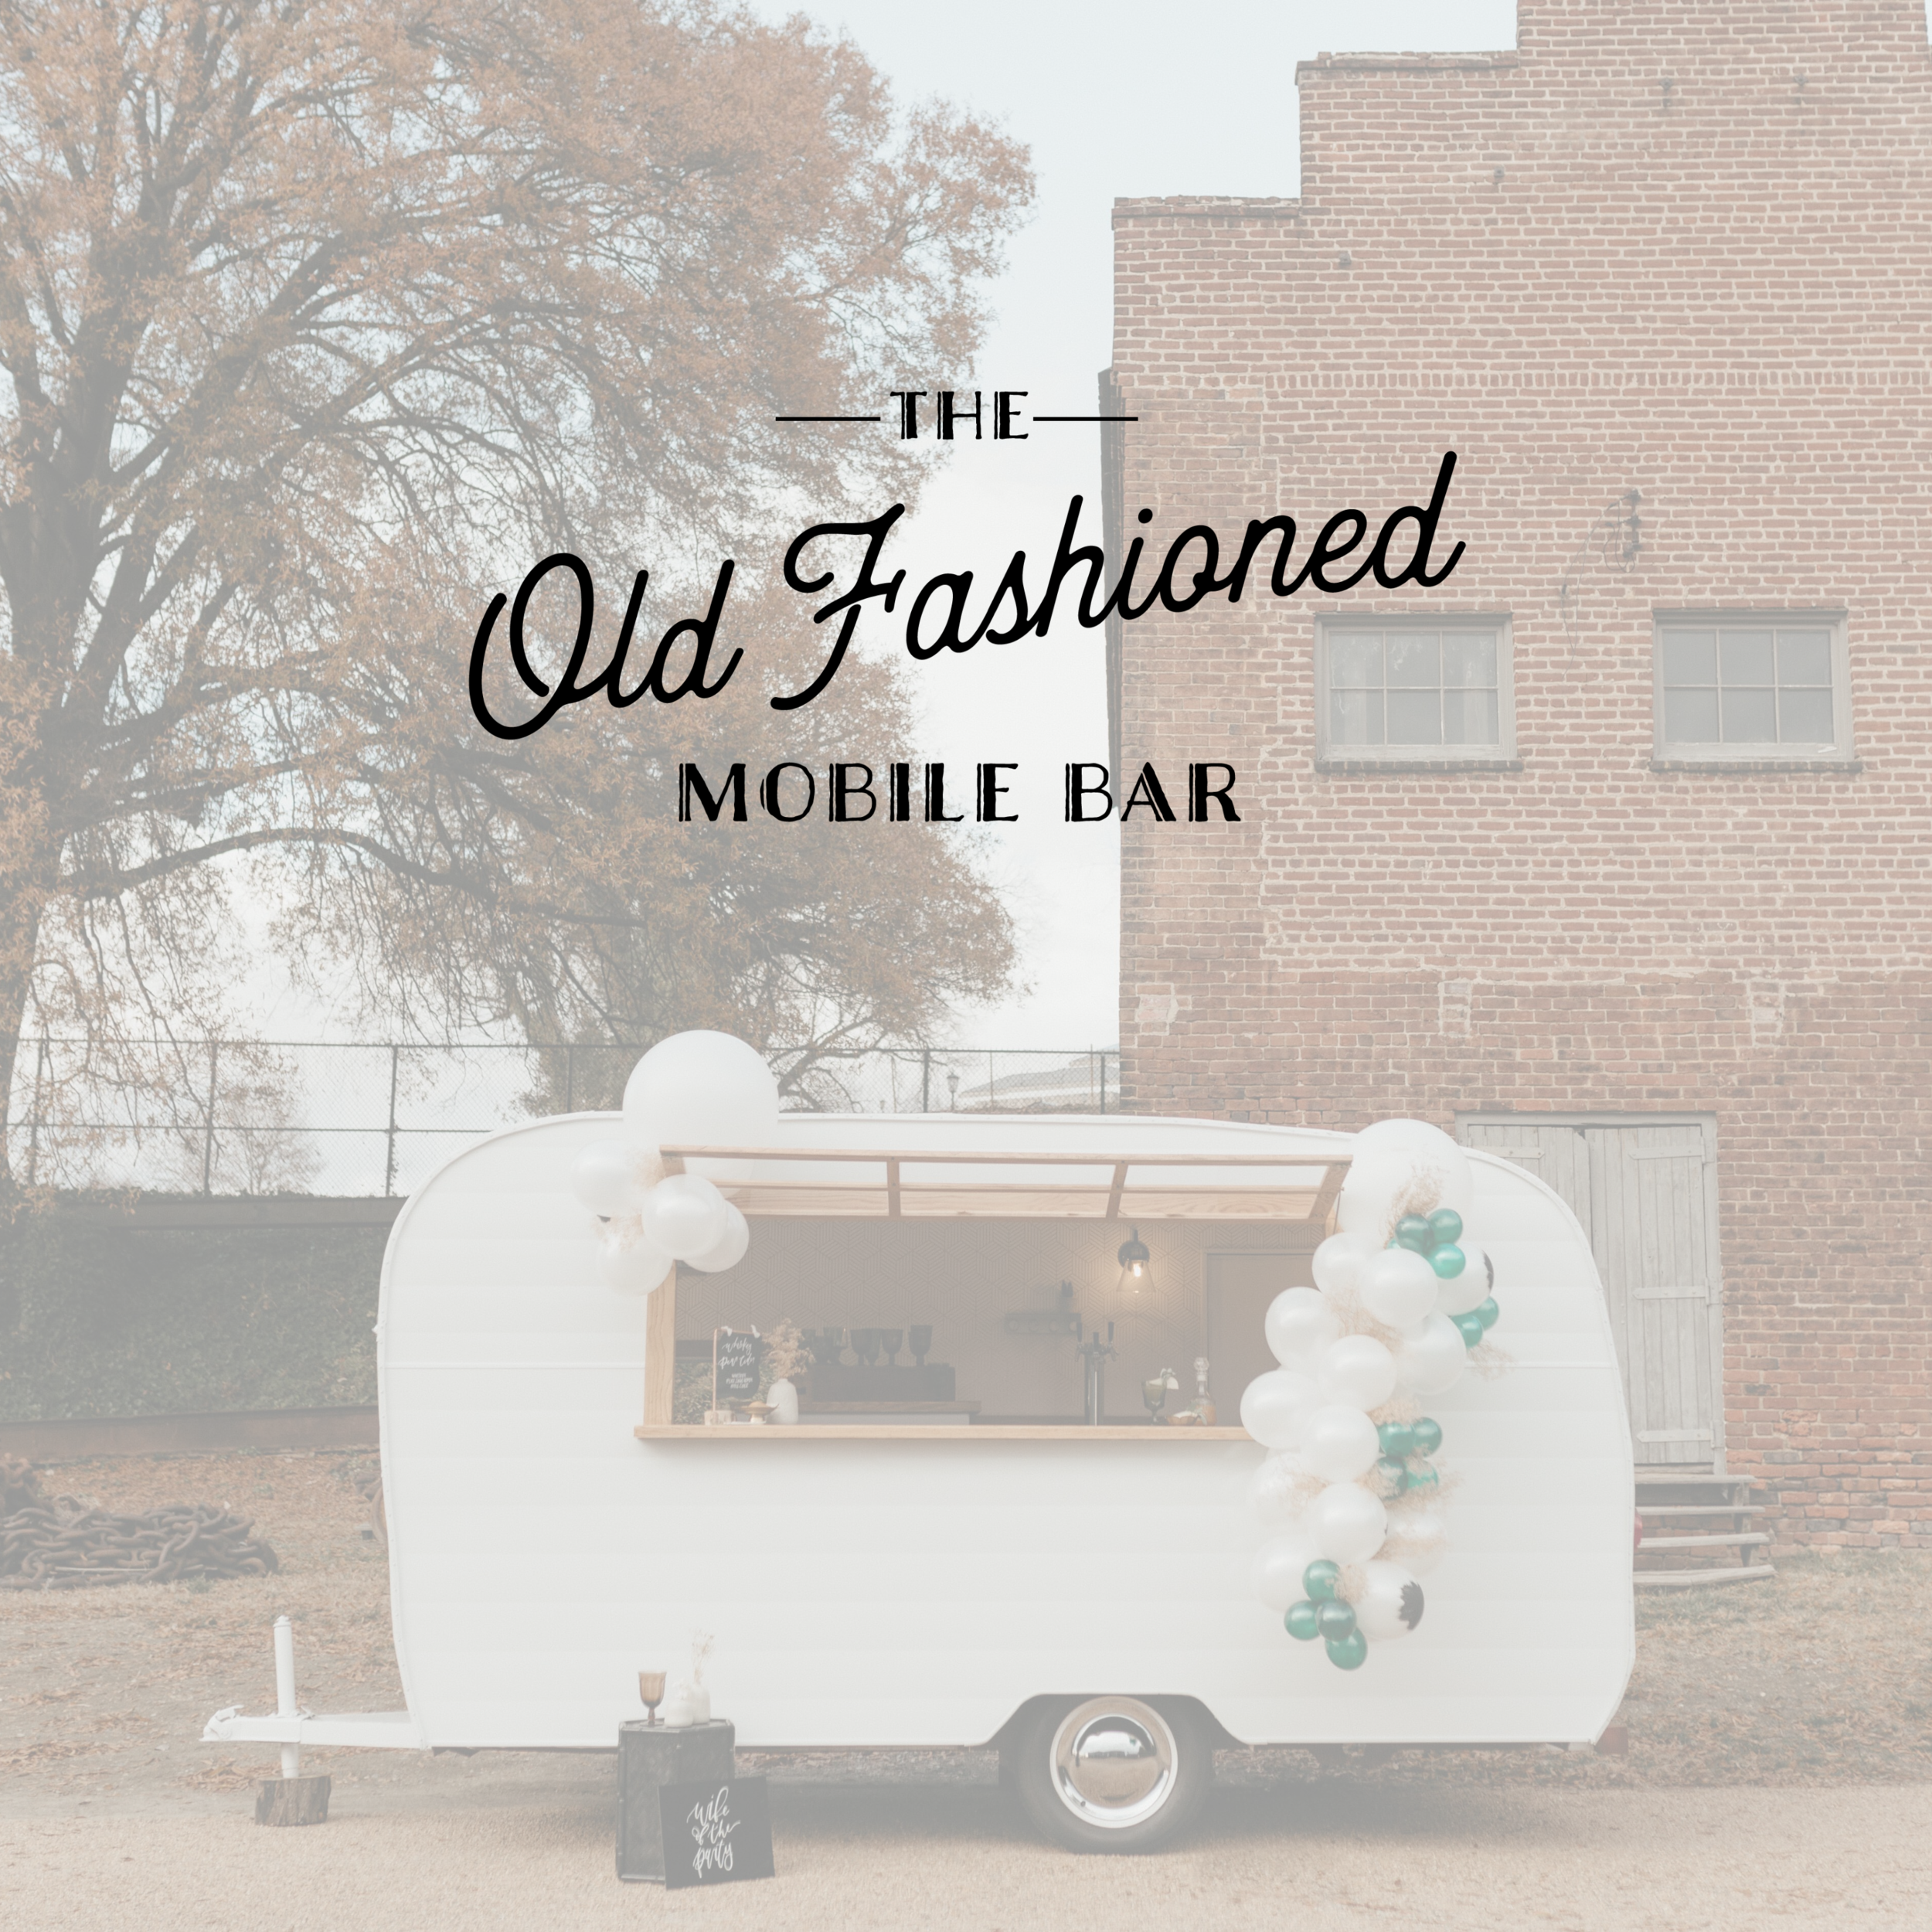 Charlotte's Premier Mobile Bar - The Old Fashioned Mobile Bar